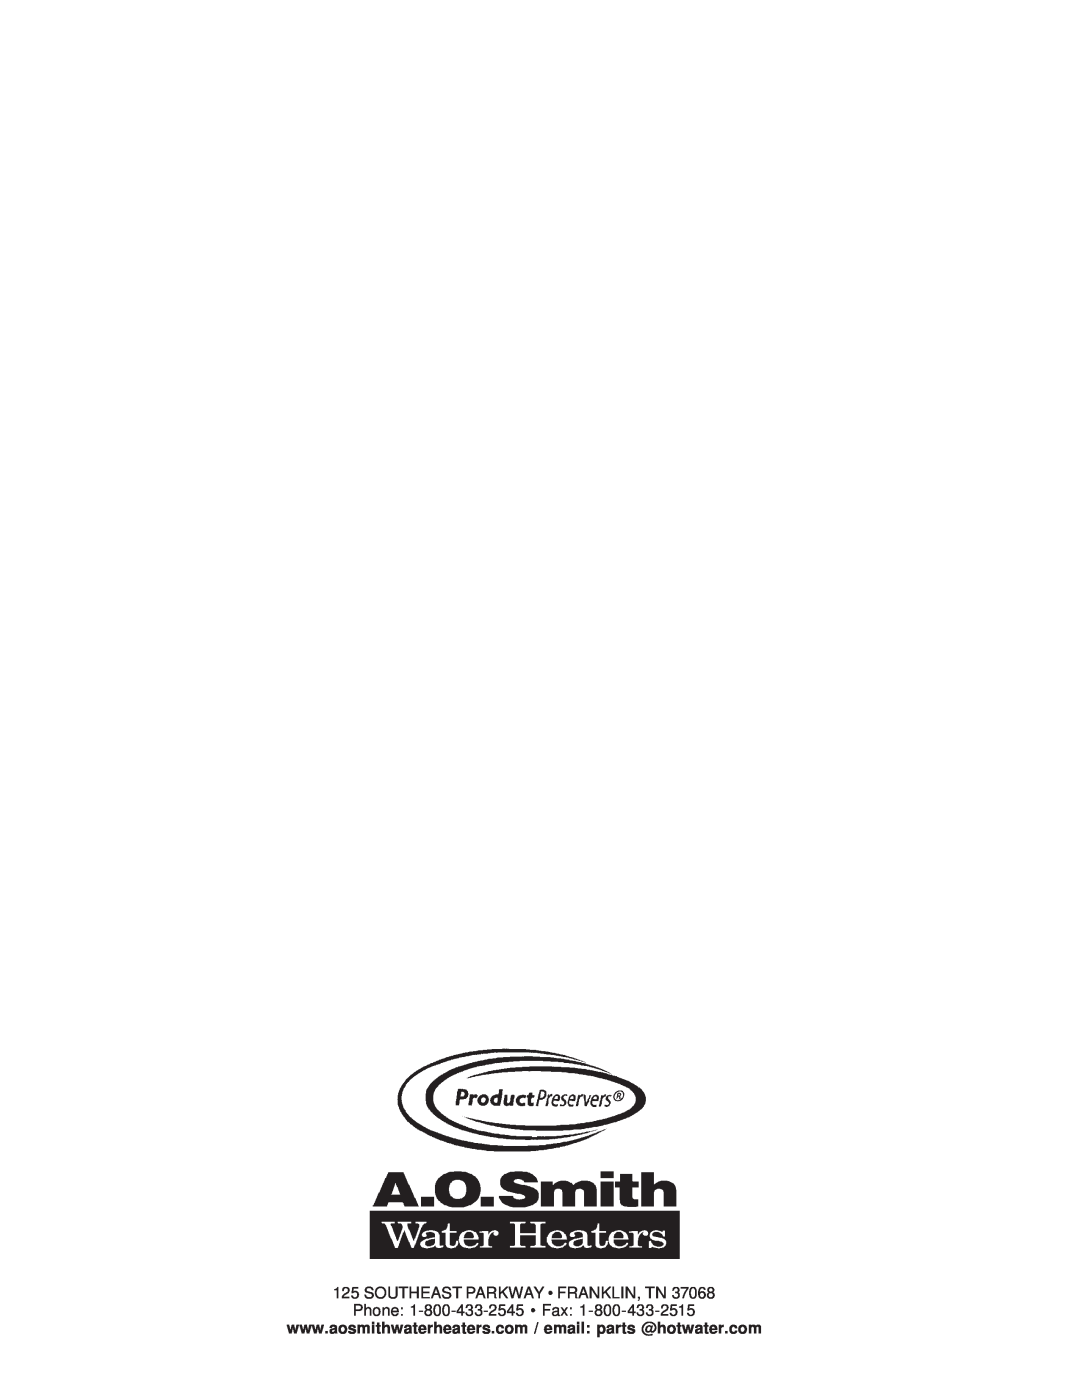 A.O. Smith GPDT, GPDX, GPDH owner manual SOUTHEAST PARKWAY FRANKLIN, TN Phone 1-800-433-2545 Fax 